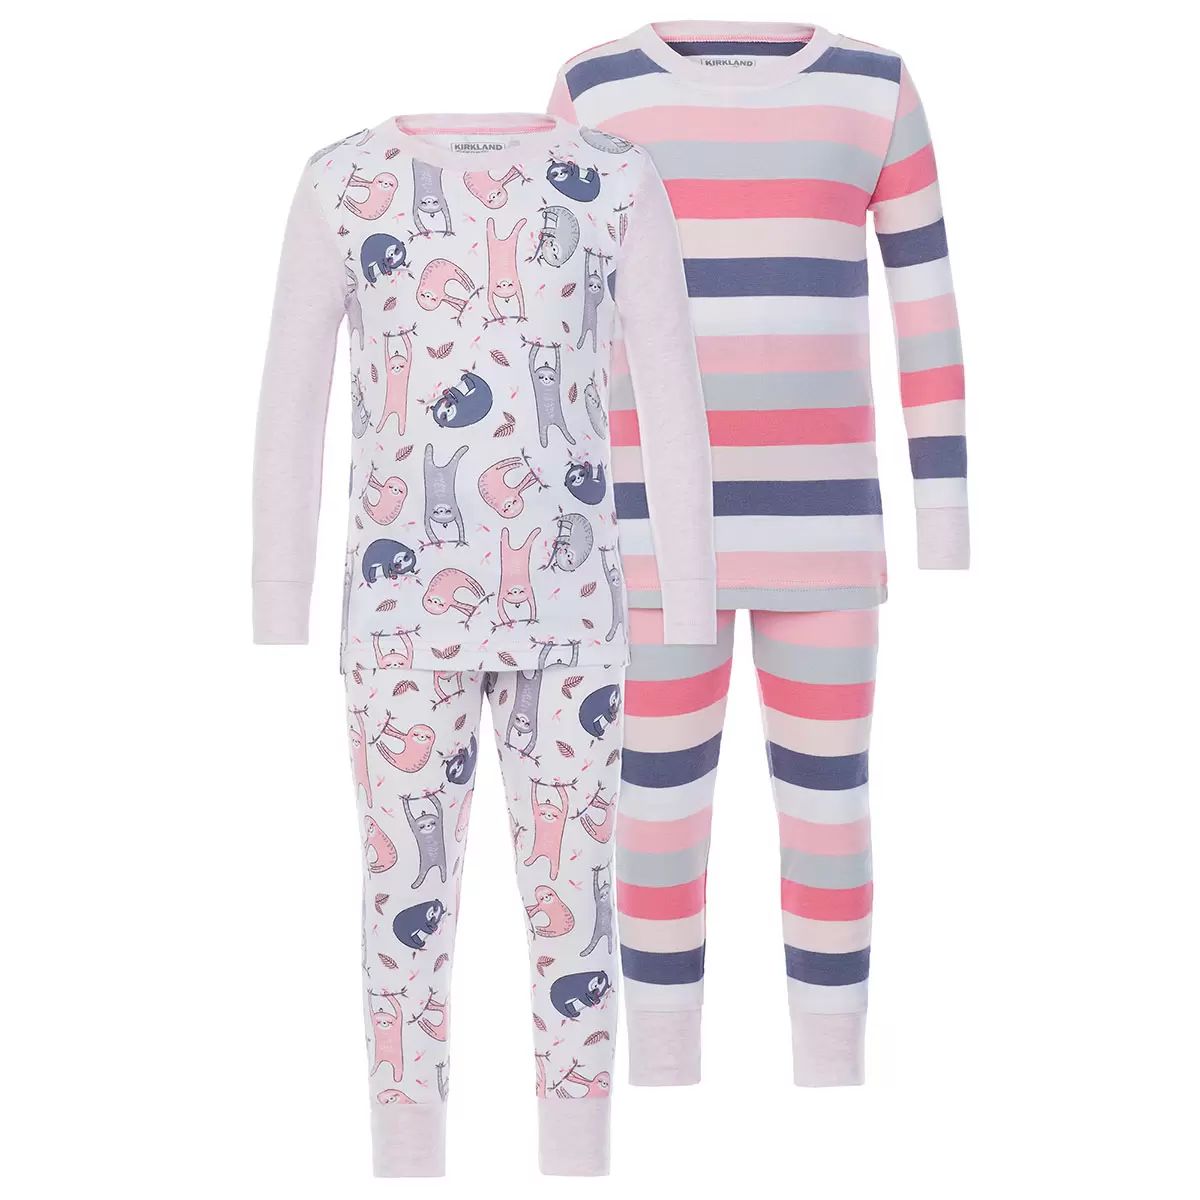 Kirkland Signature Children's Cotton 4 Piece Pyjama Set in Sloth